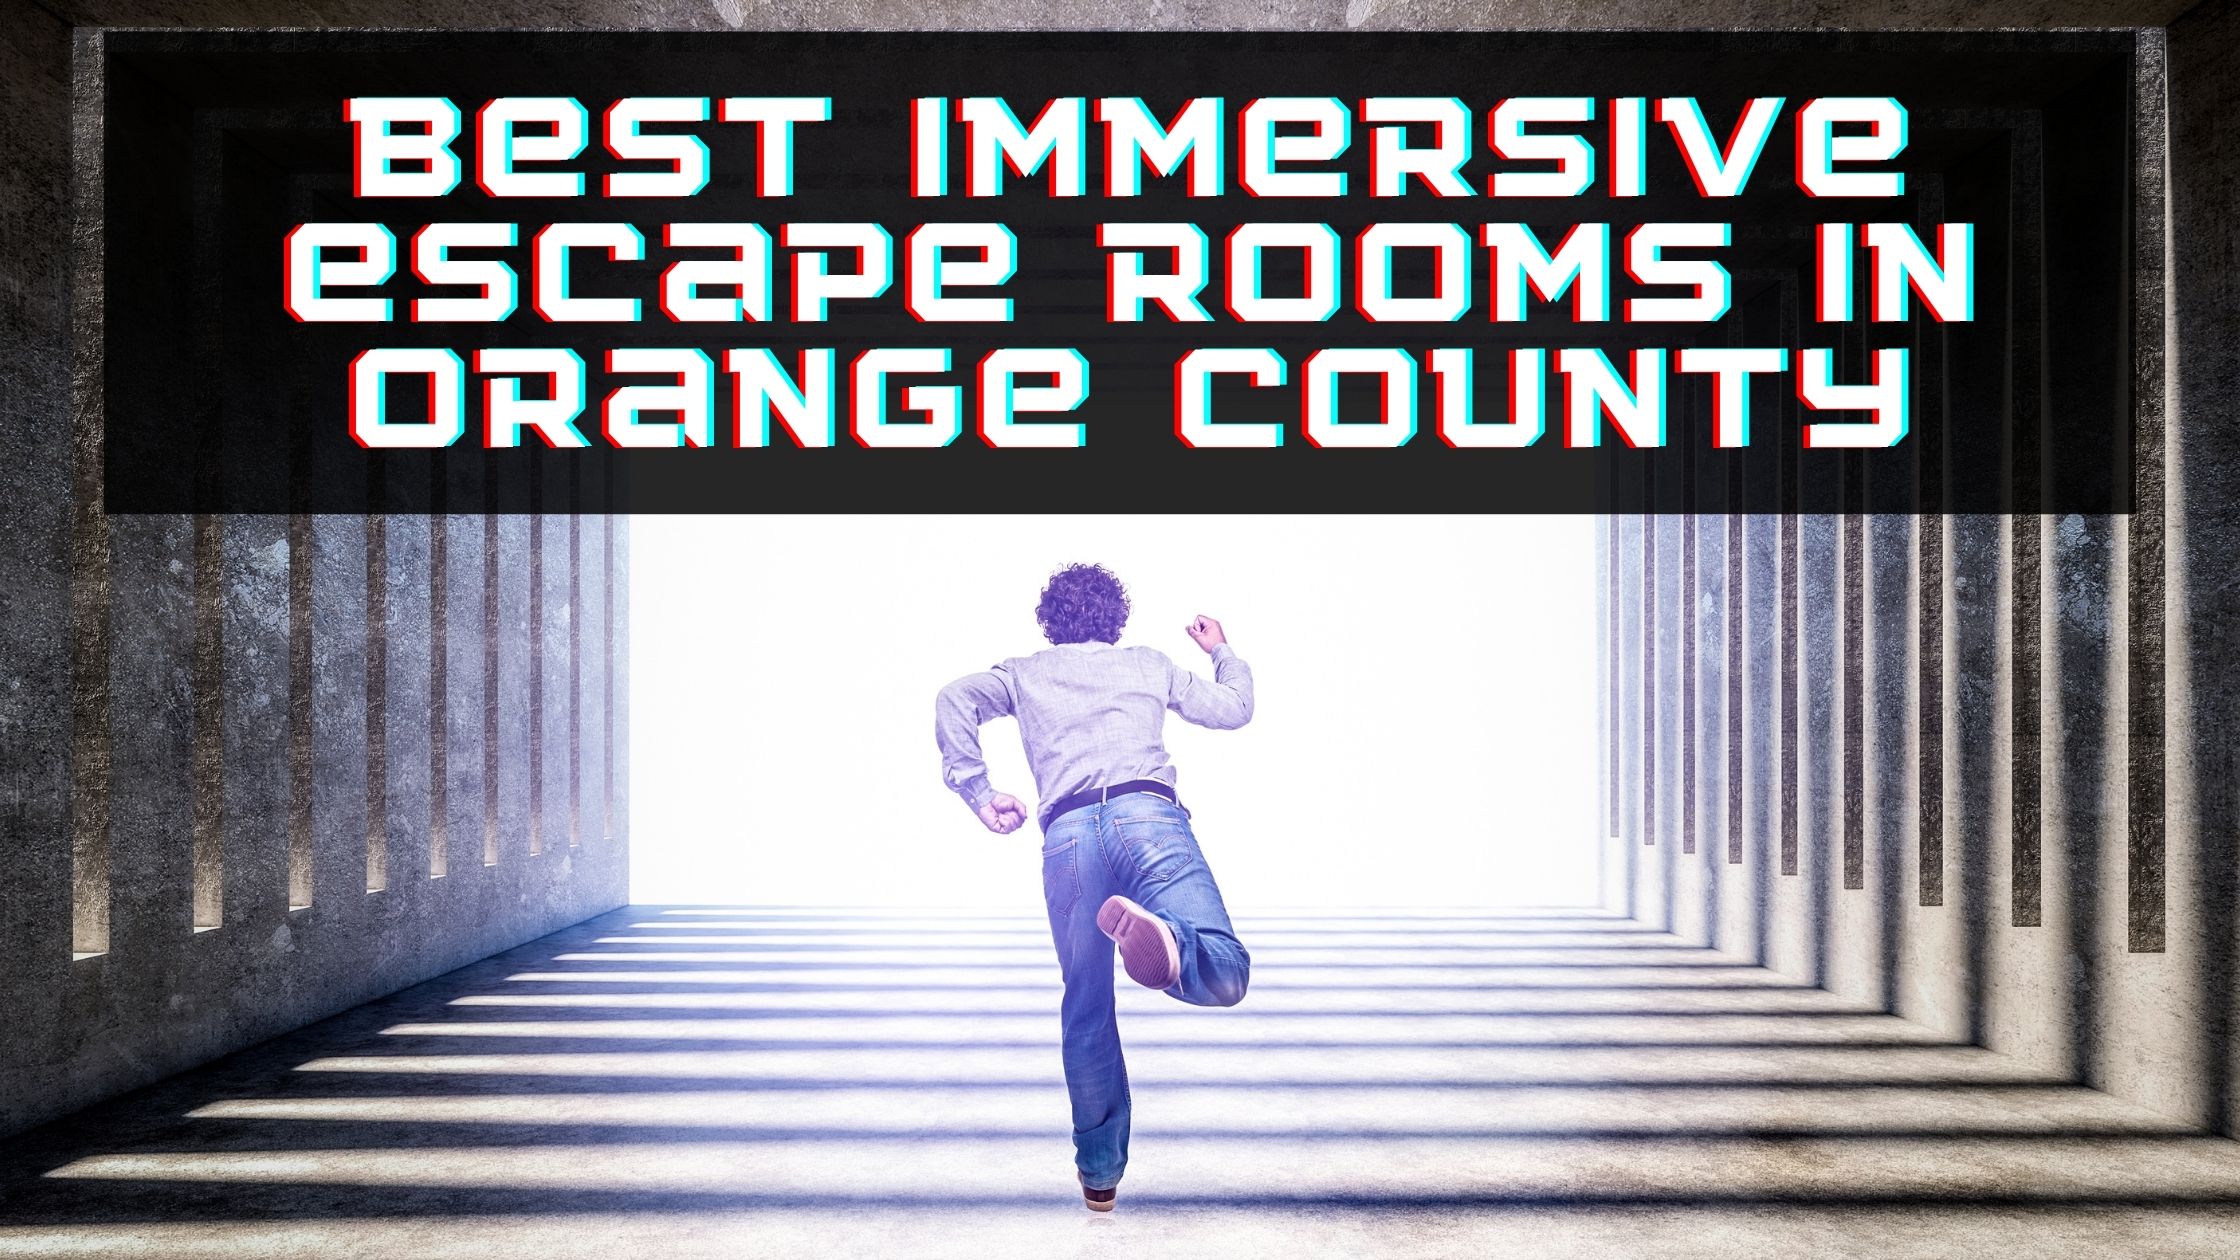 Orange County Escape Room - Top Rated - UNLOCKED